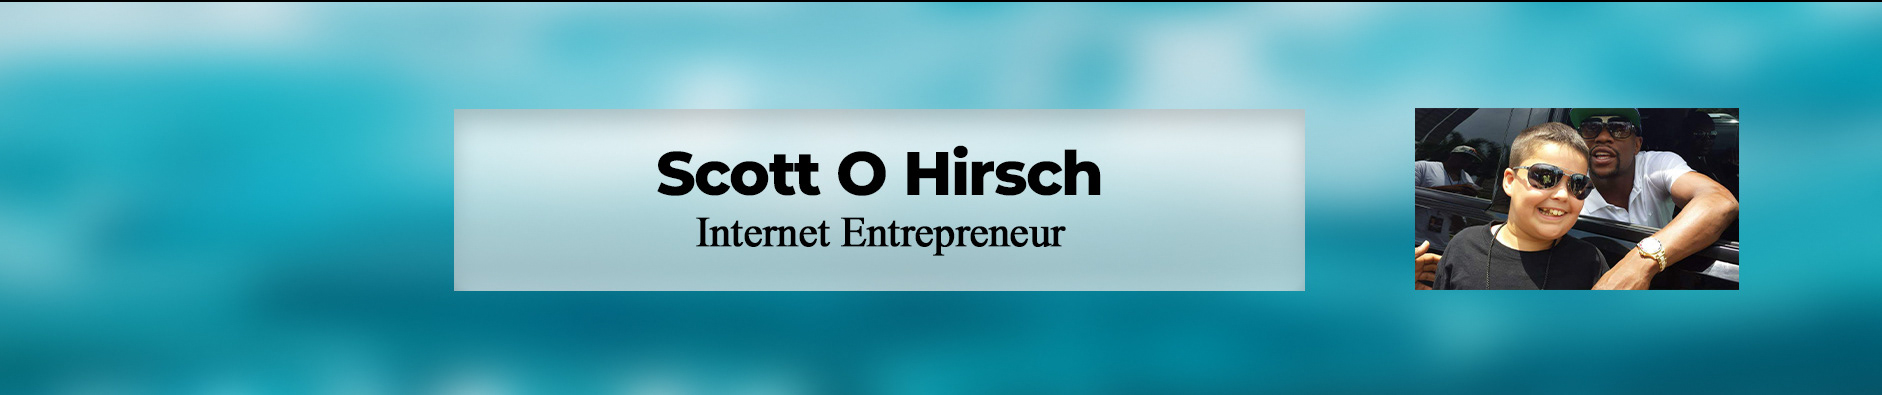 Scott O Hirsch's profile banner